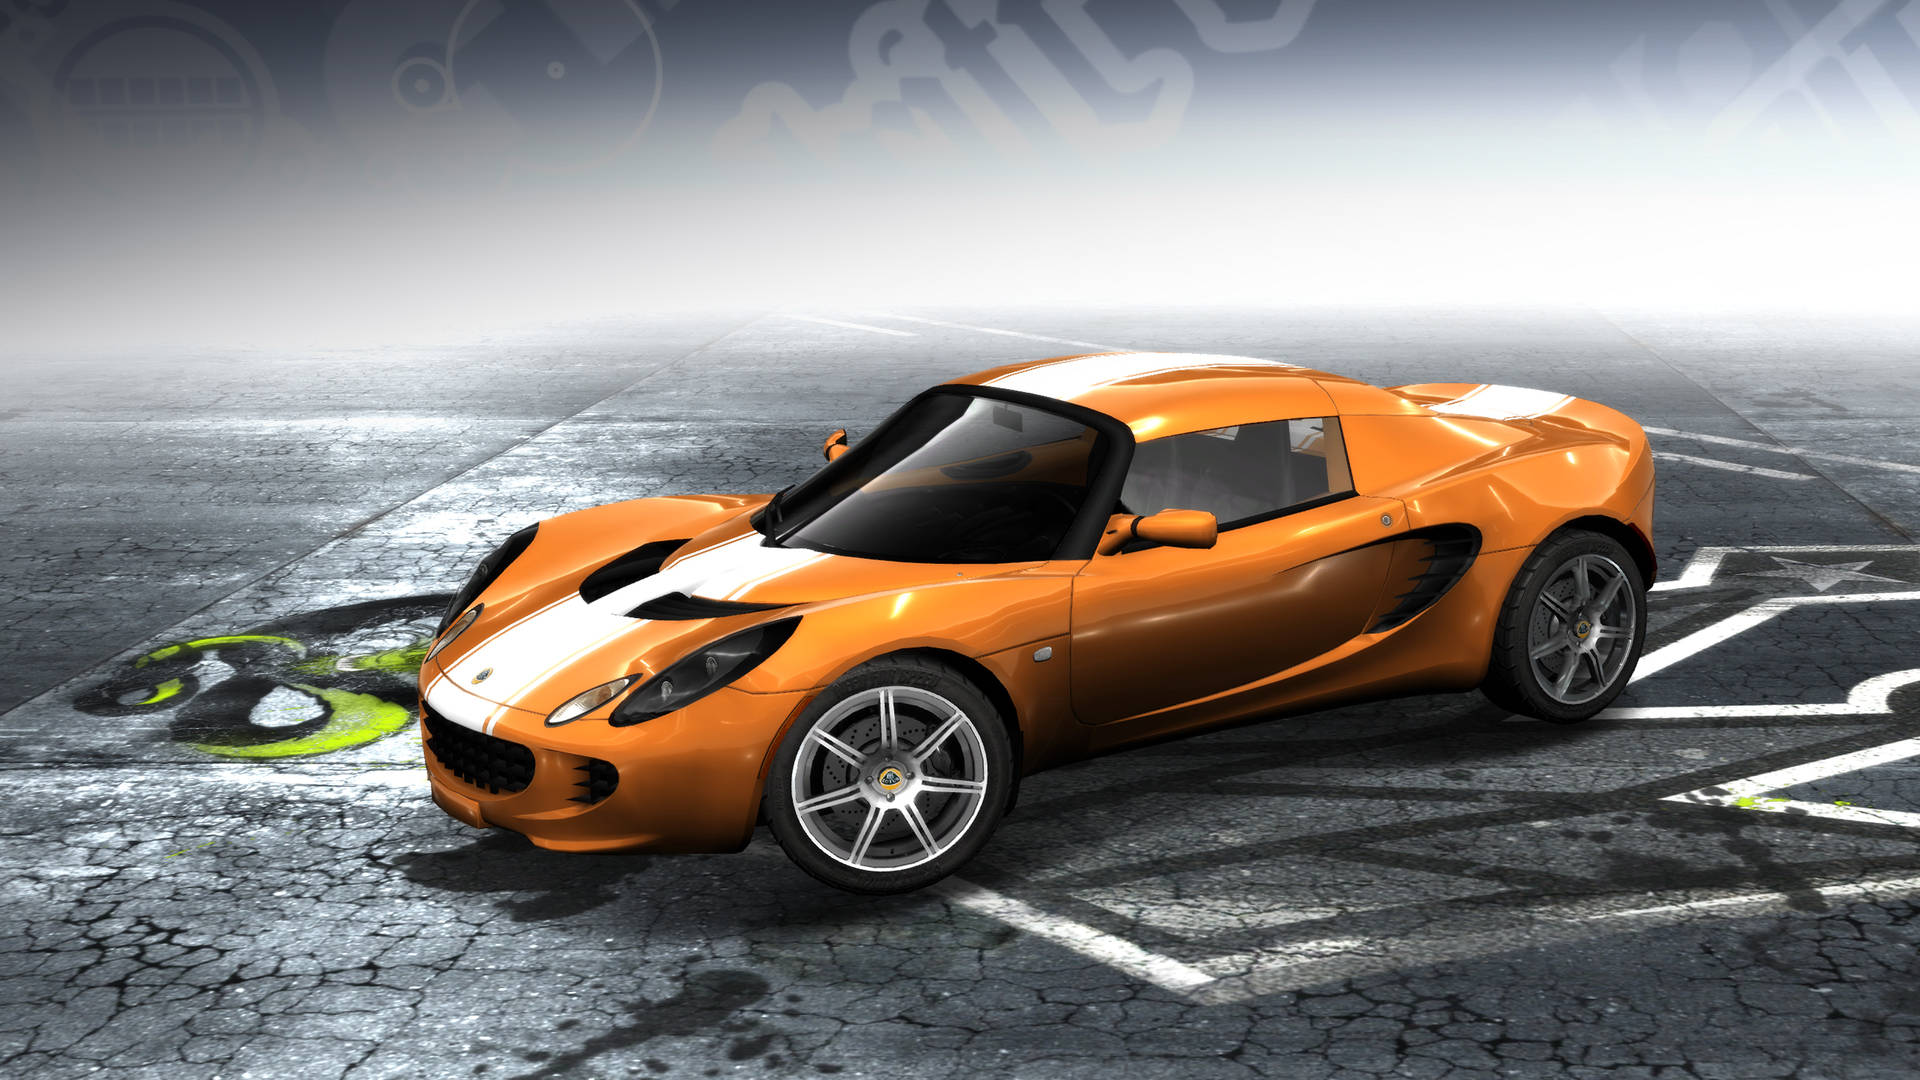 Free Lotus Car Wallpaper Downloads, [100+] Lotus Car Wallpapers for FREE |  